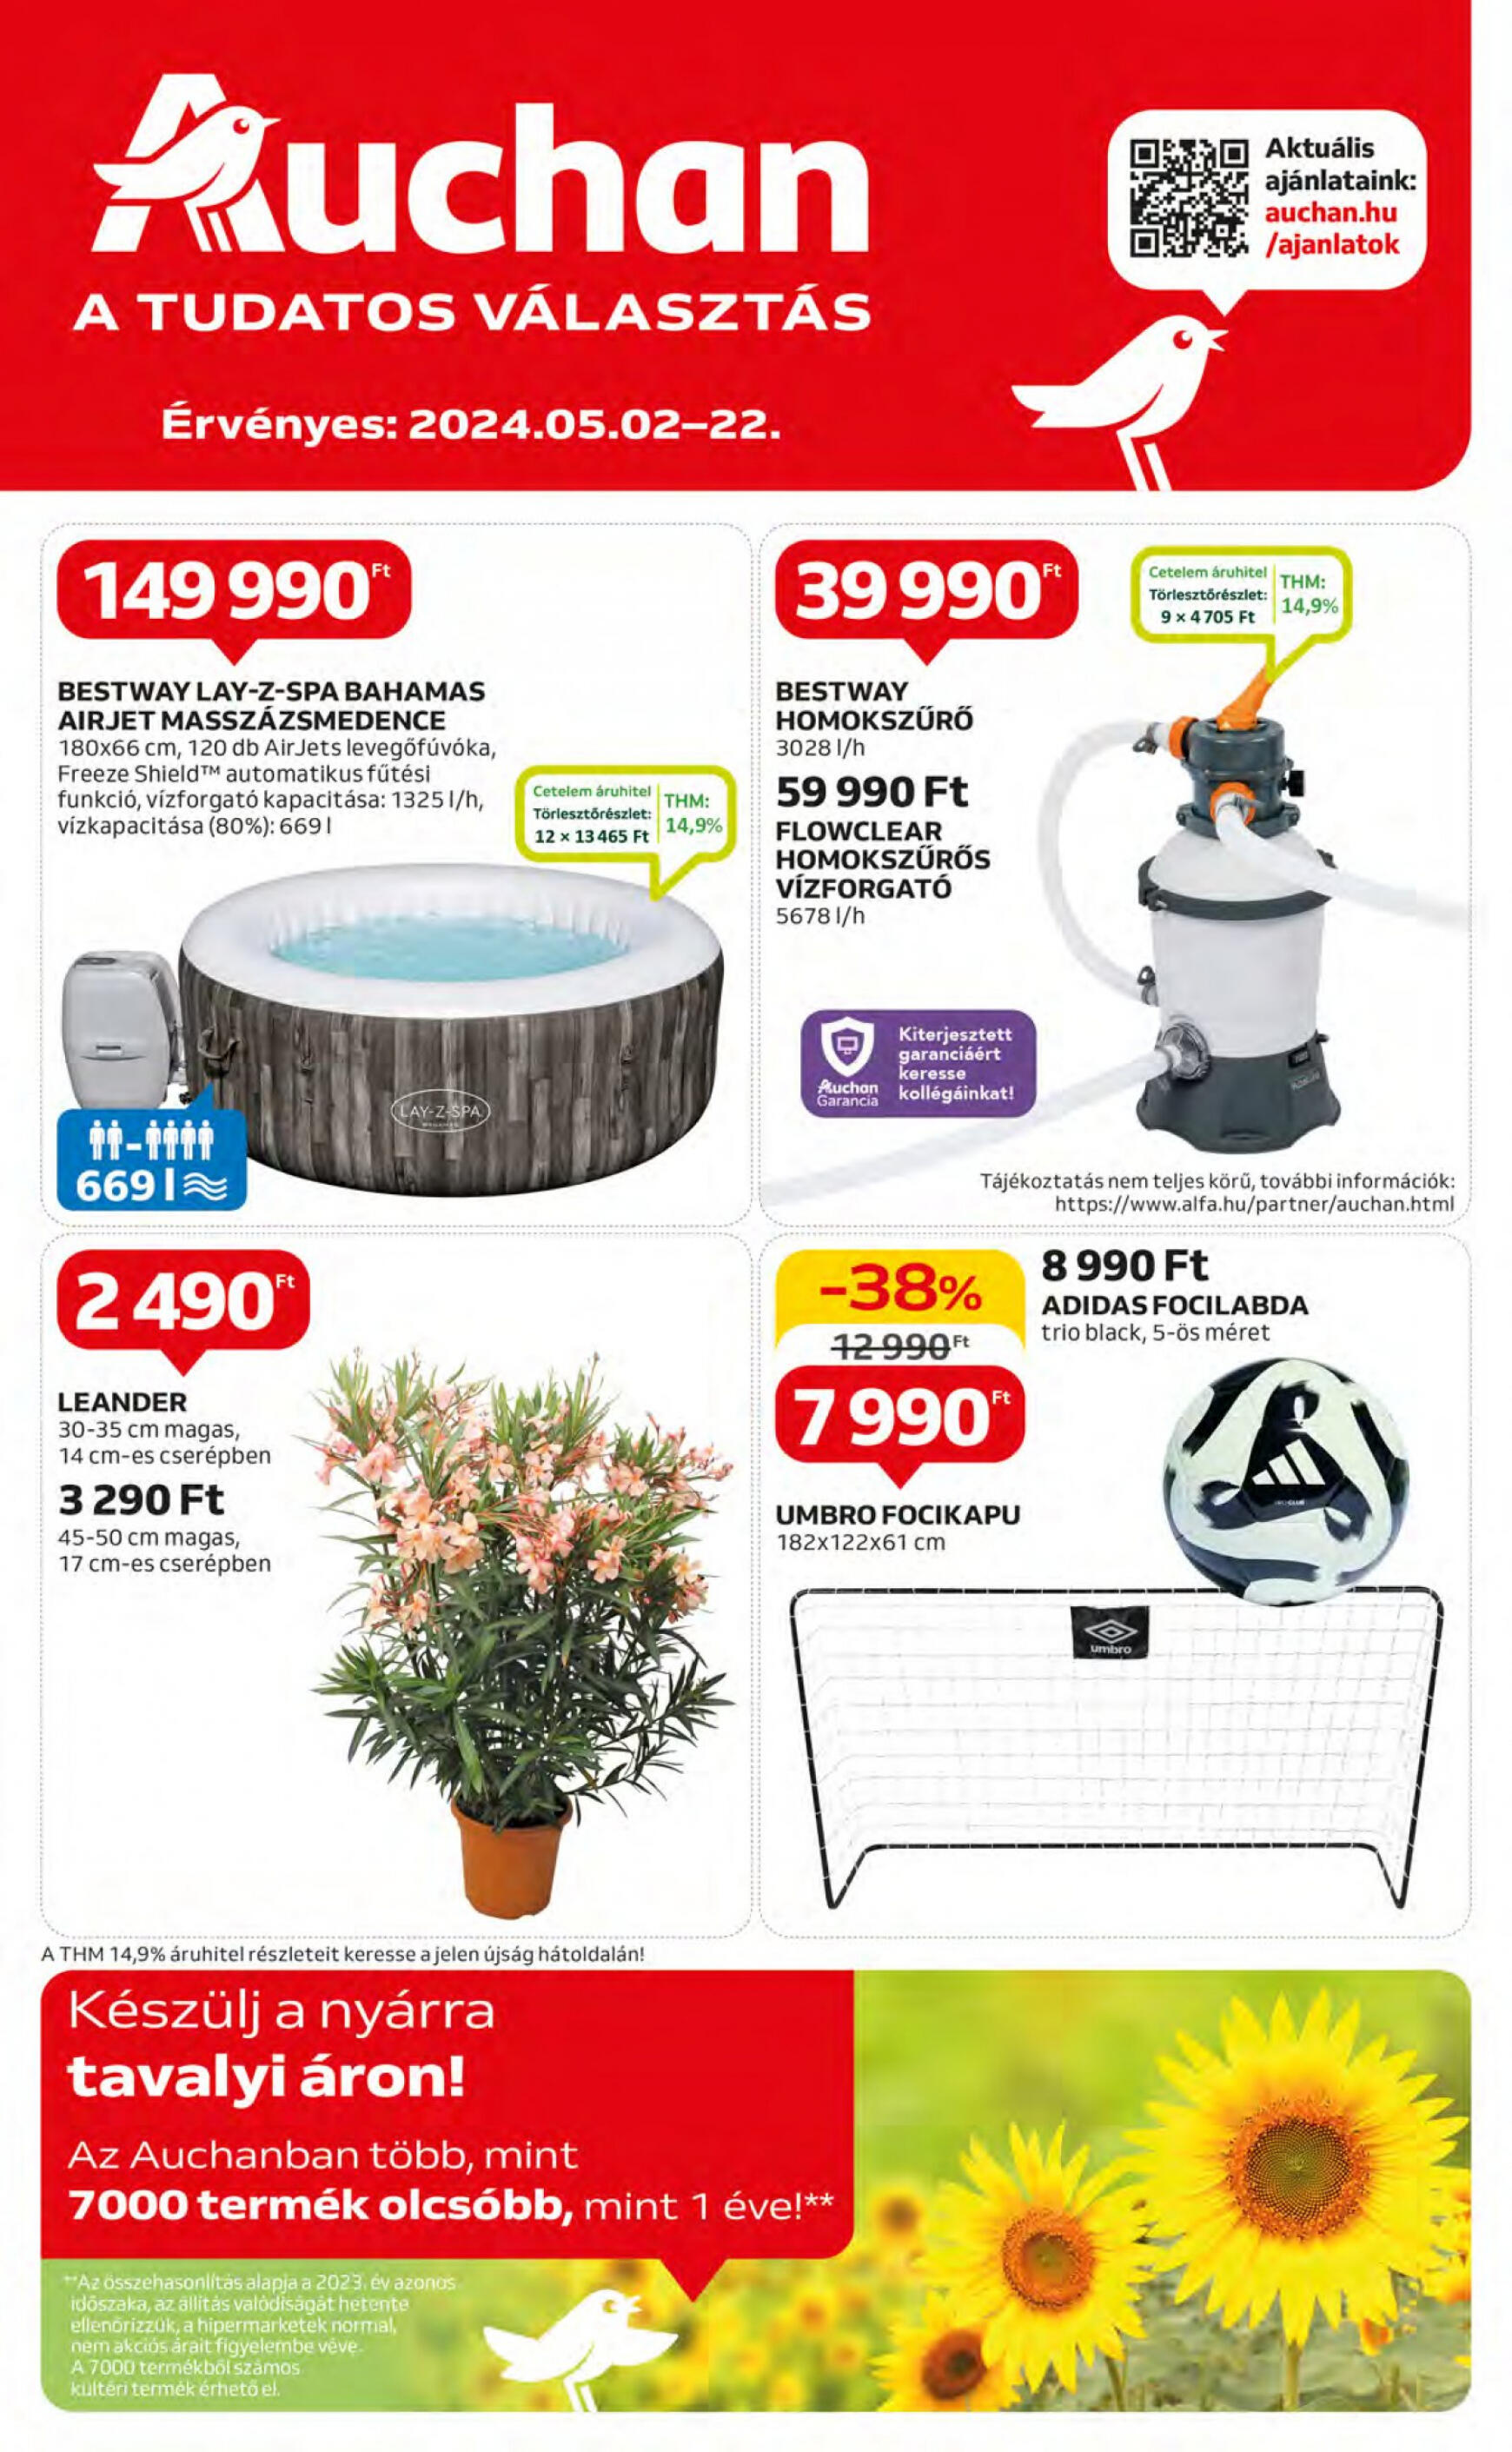 auchan - Aktuális újság Auchan - 05.02. - 05.22. - page: 1